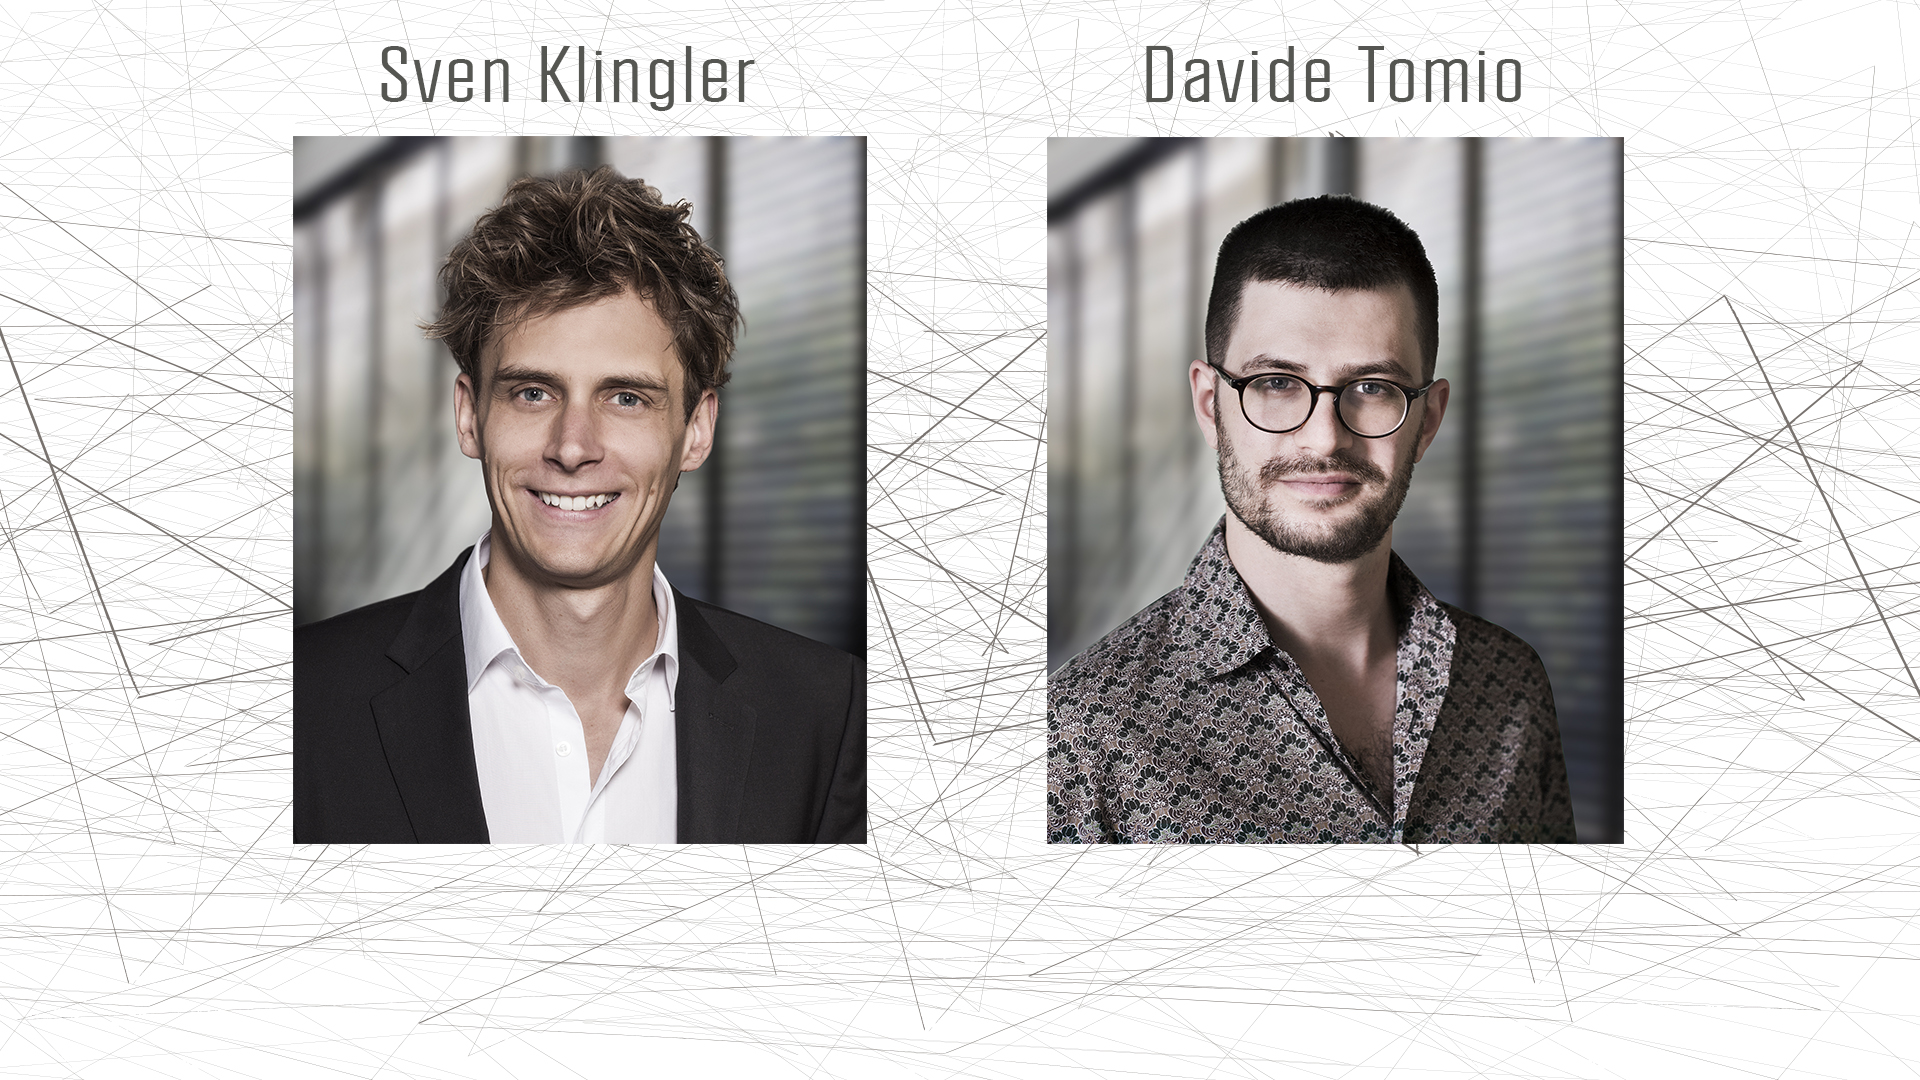 Job Market Candidates: Sven Klingler and Davide Tomio